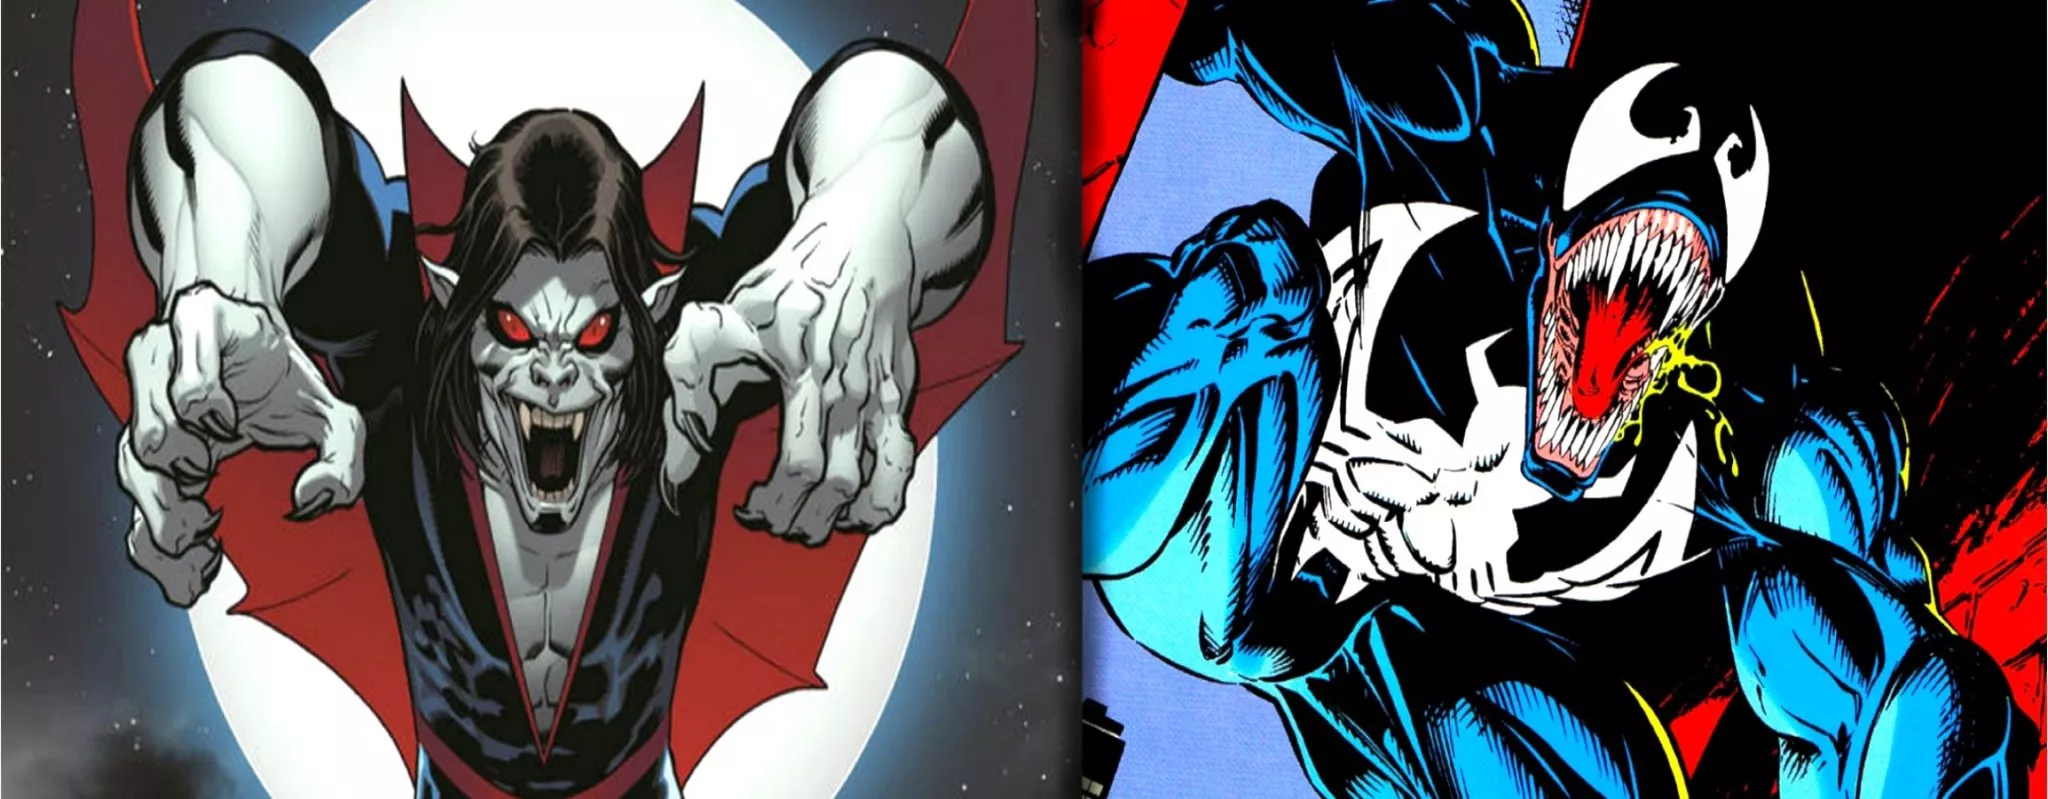 Continuazione di Venom è filmu di Morbius